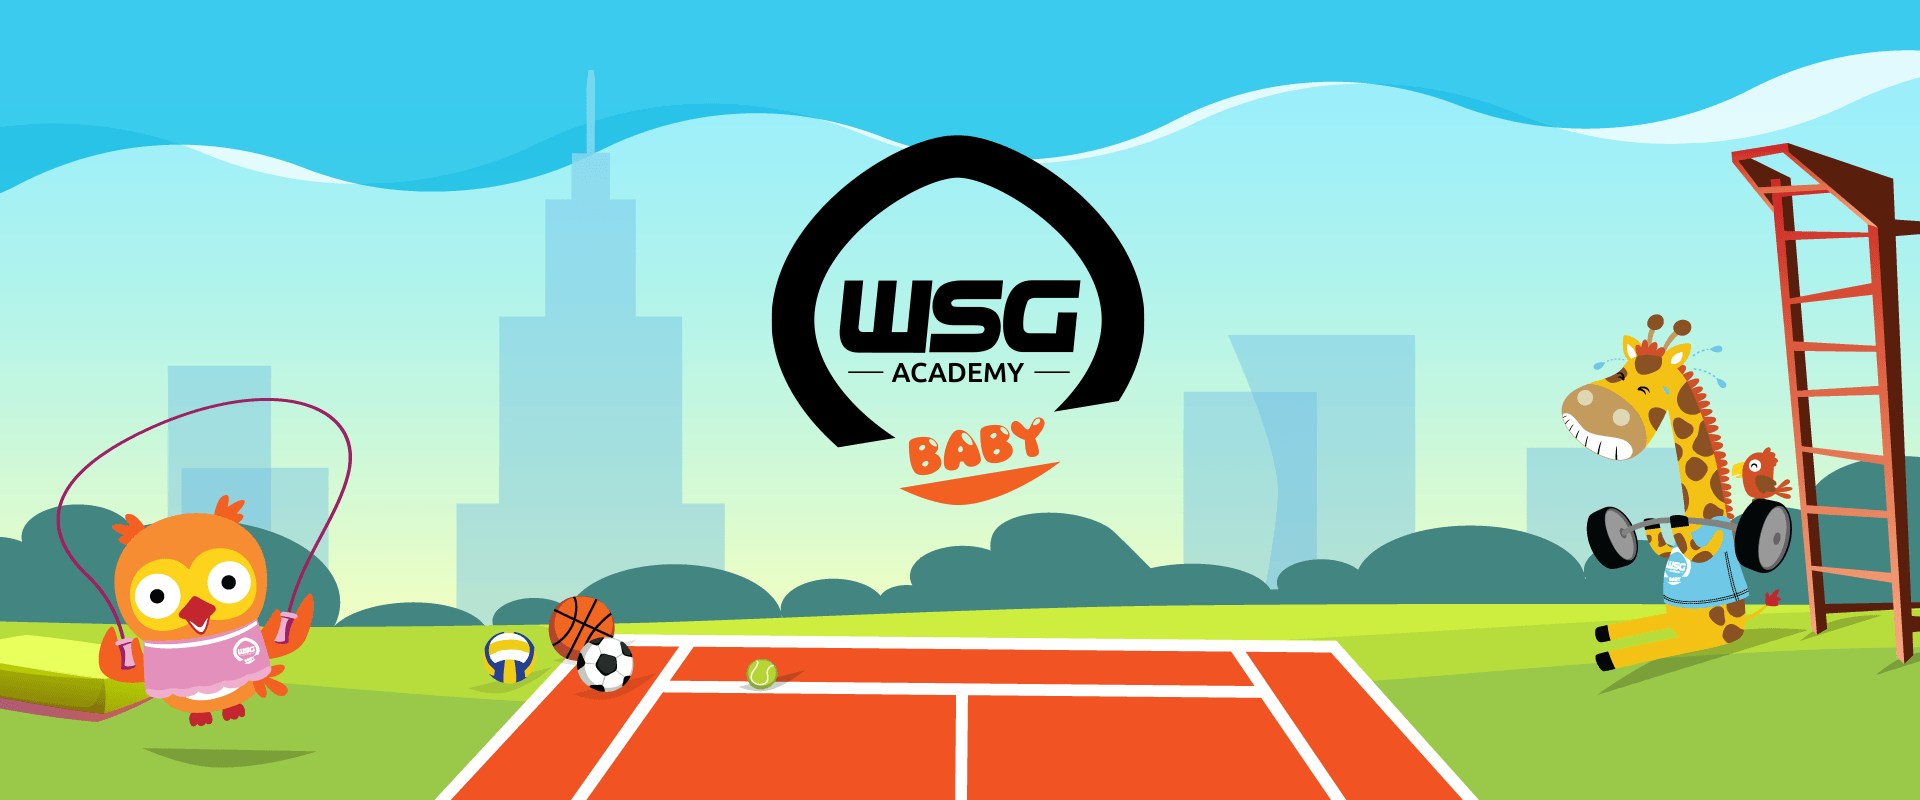 WSG Academy Baby